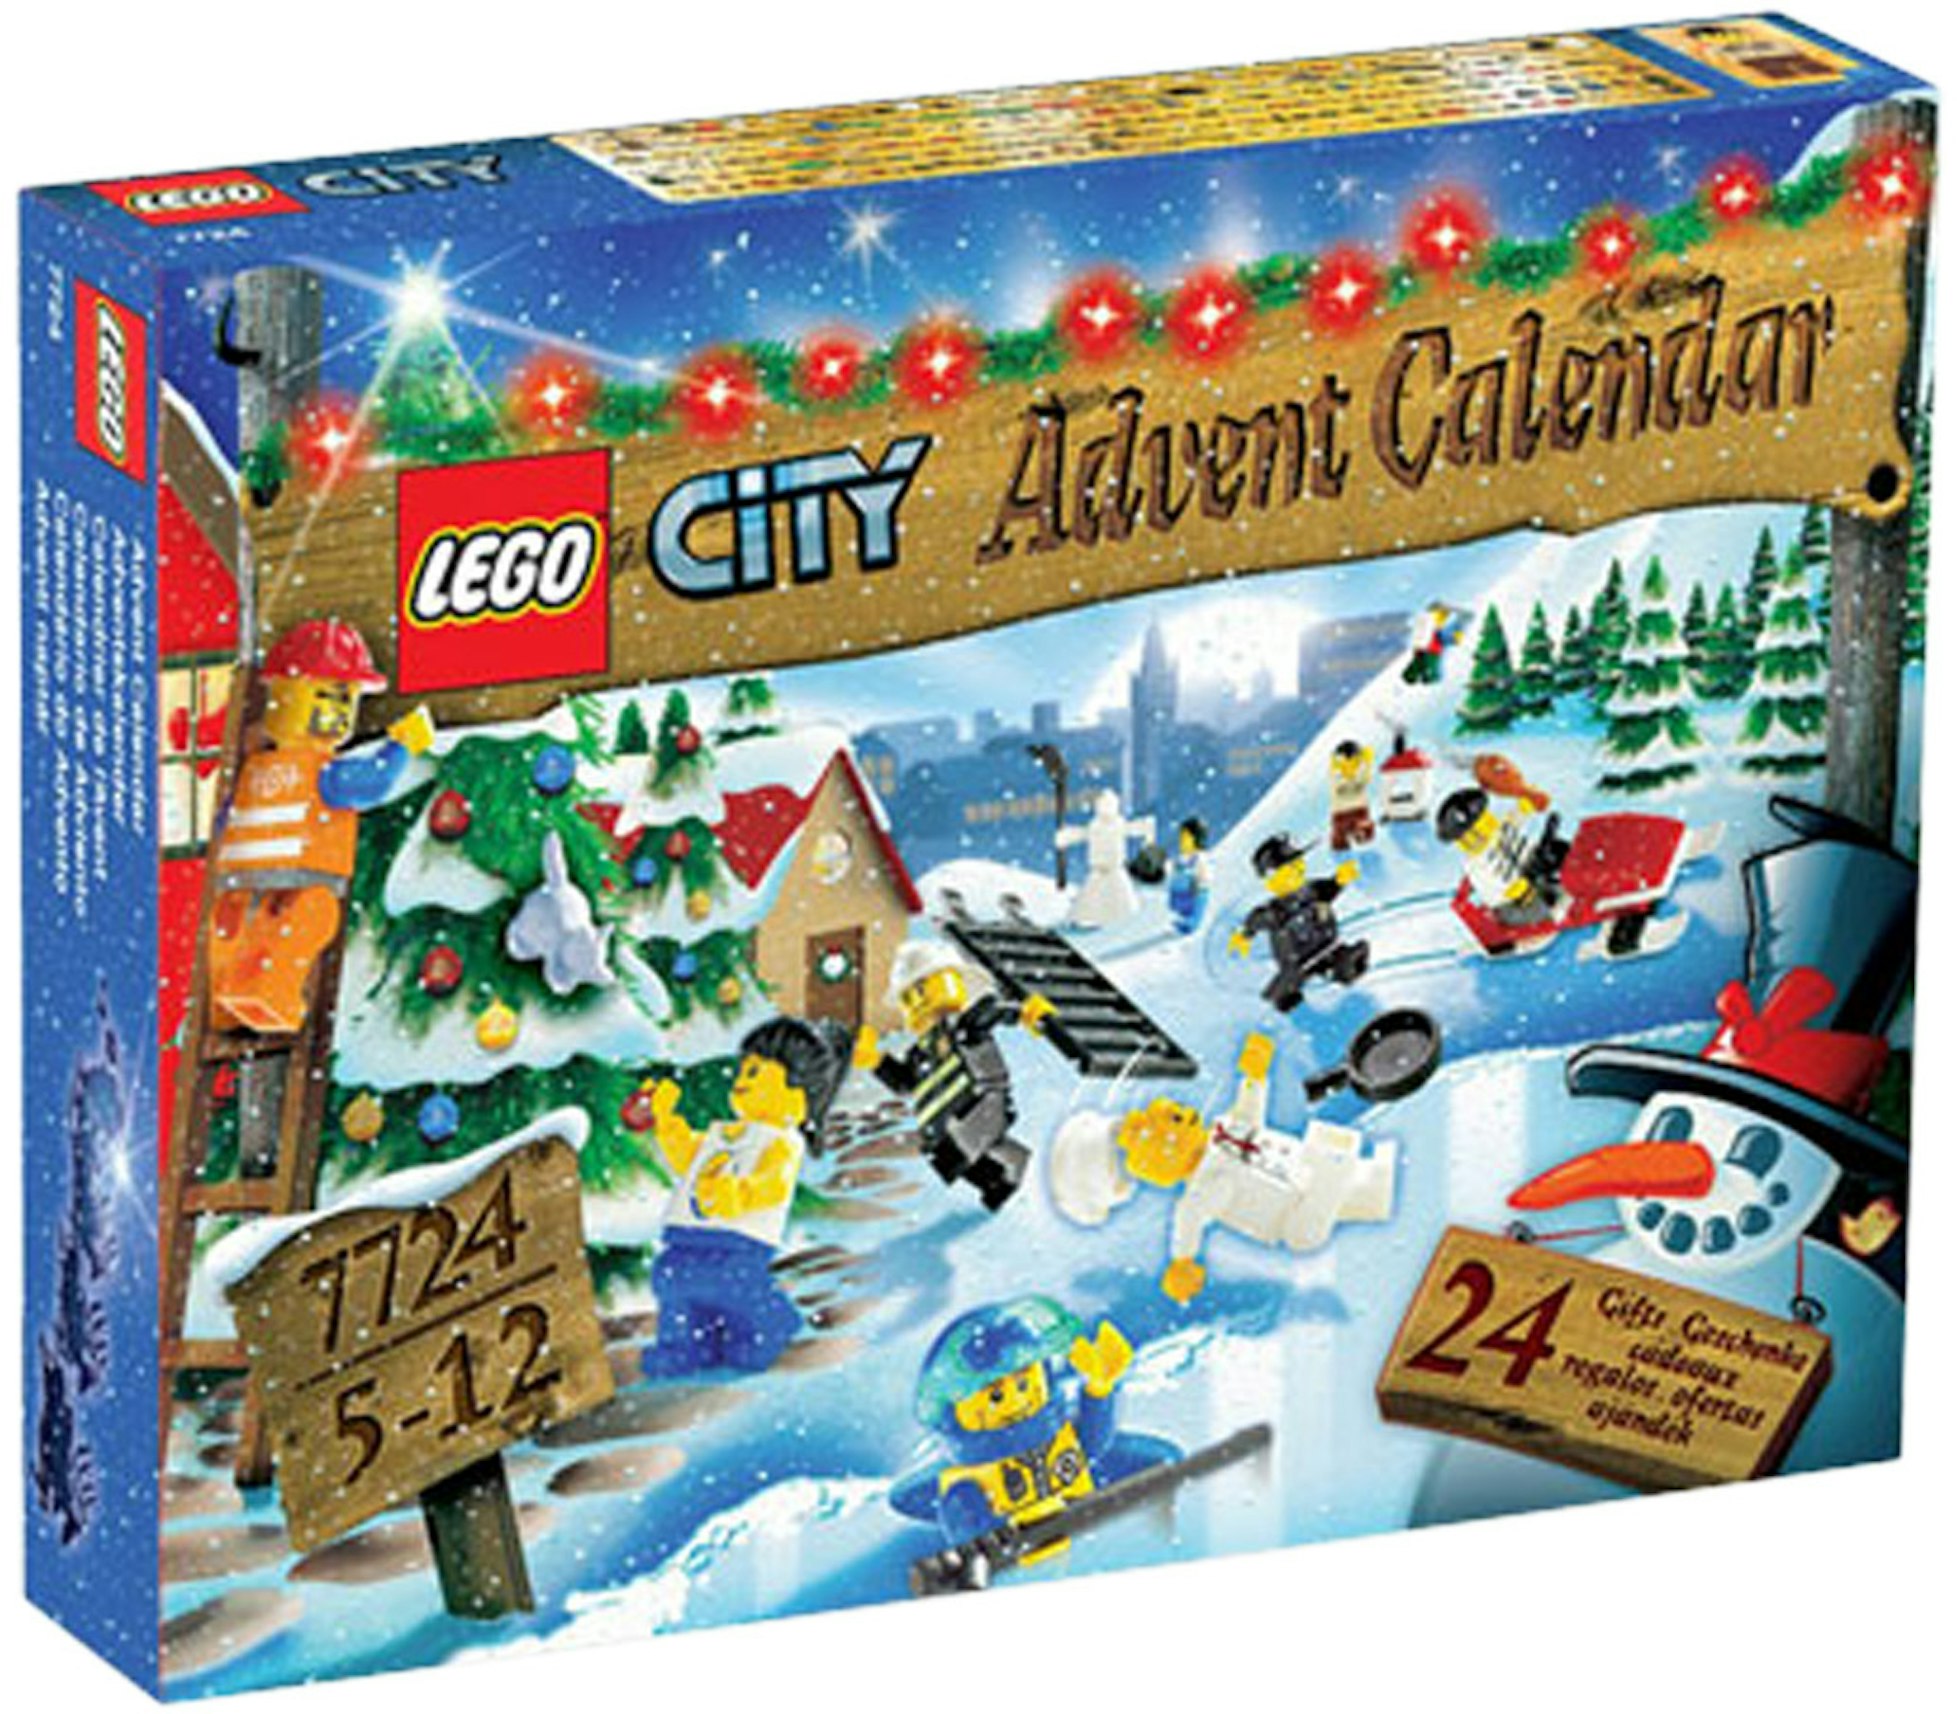 LEGO City Advent Set 7724 - US